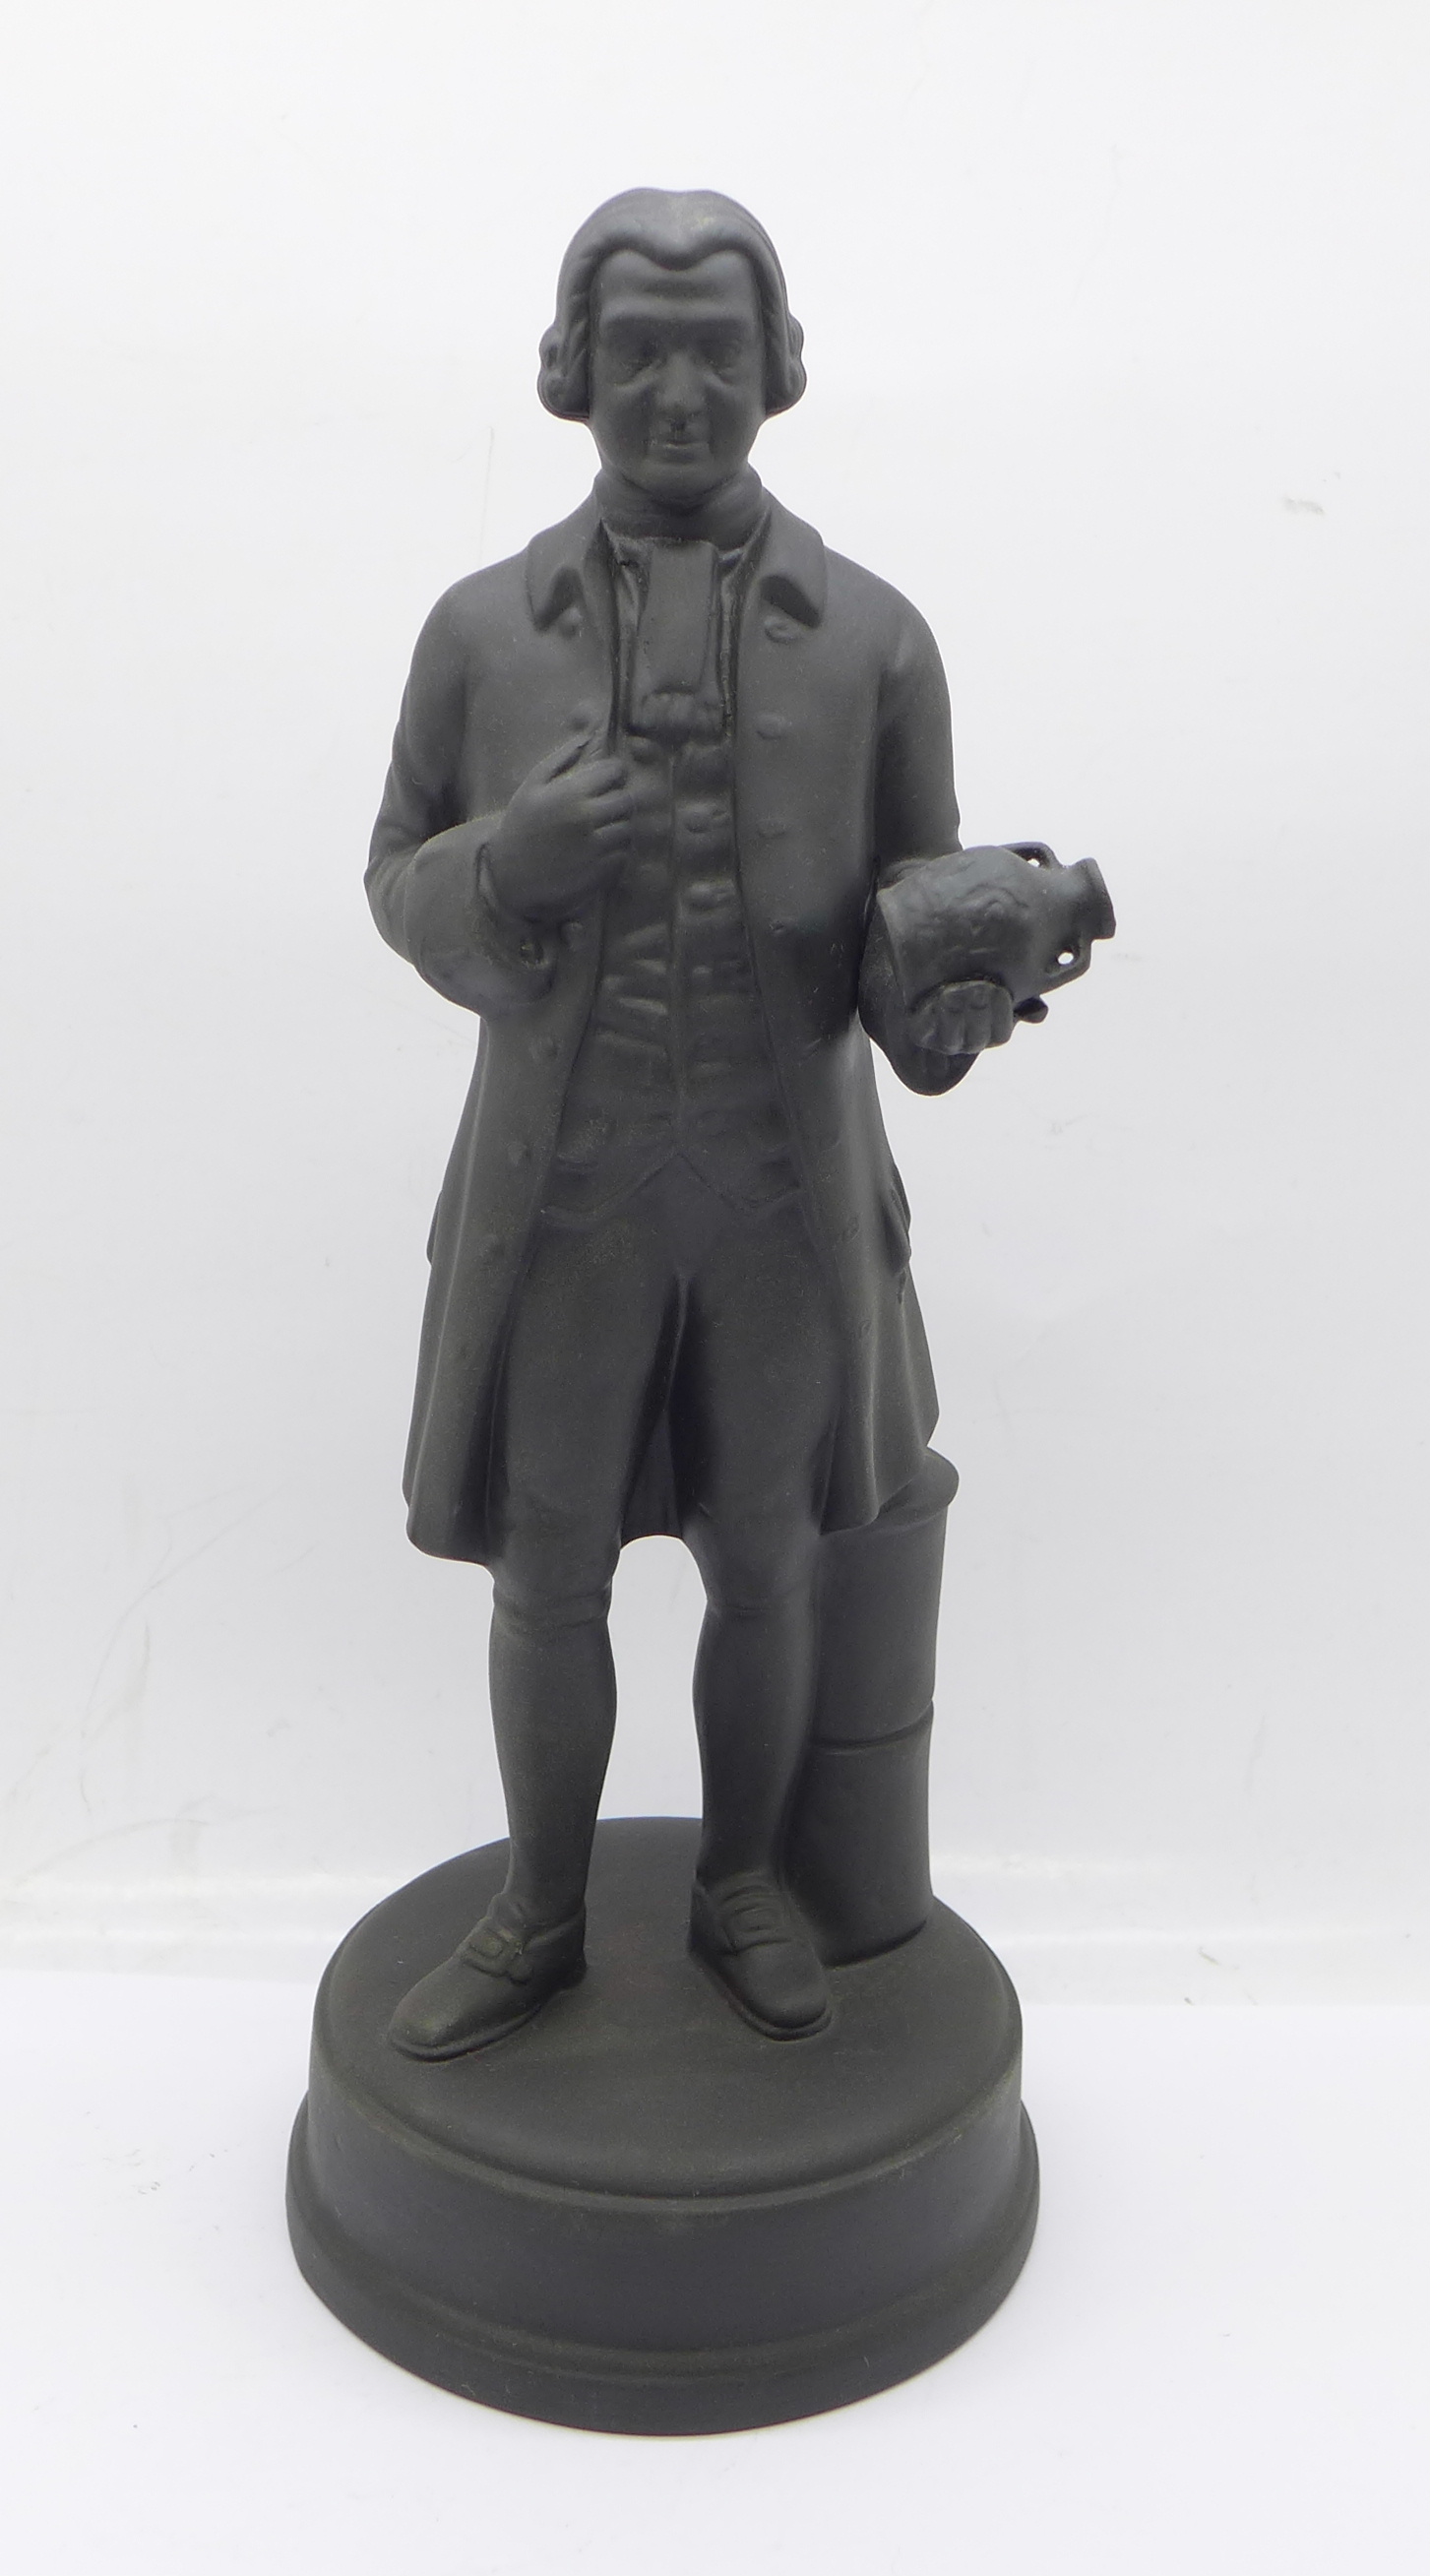 A Wedgwood black basalt figure of Josiah Wedgwood, 23cm